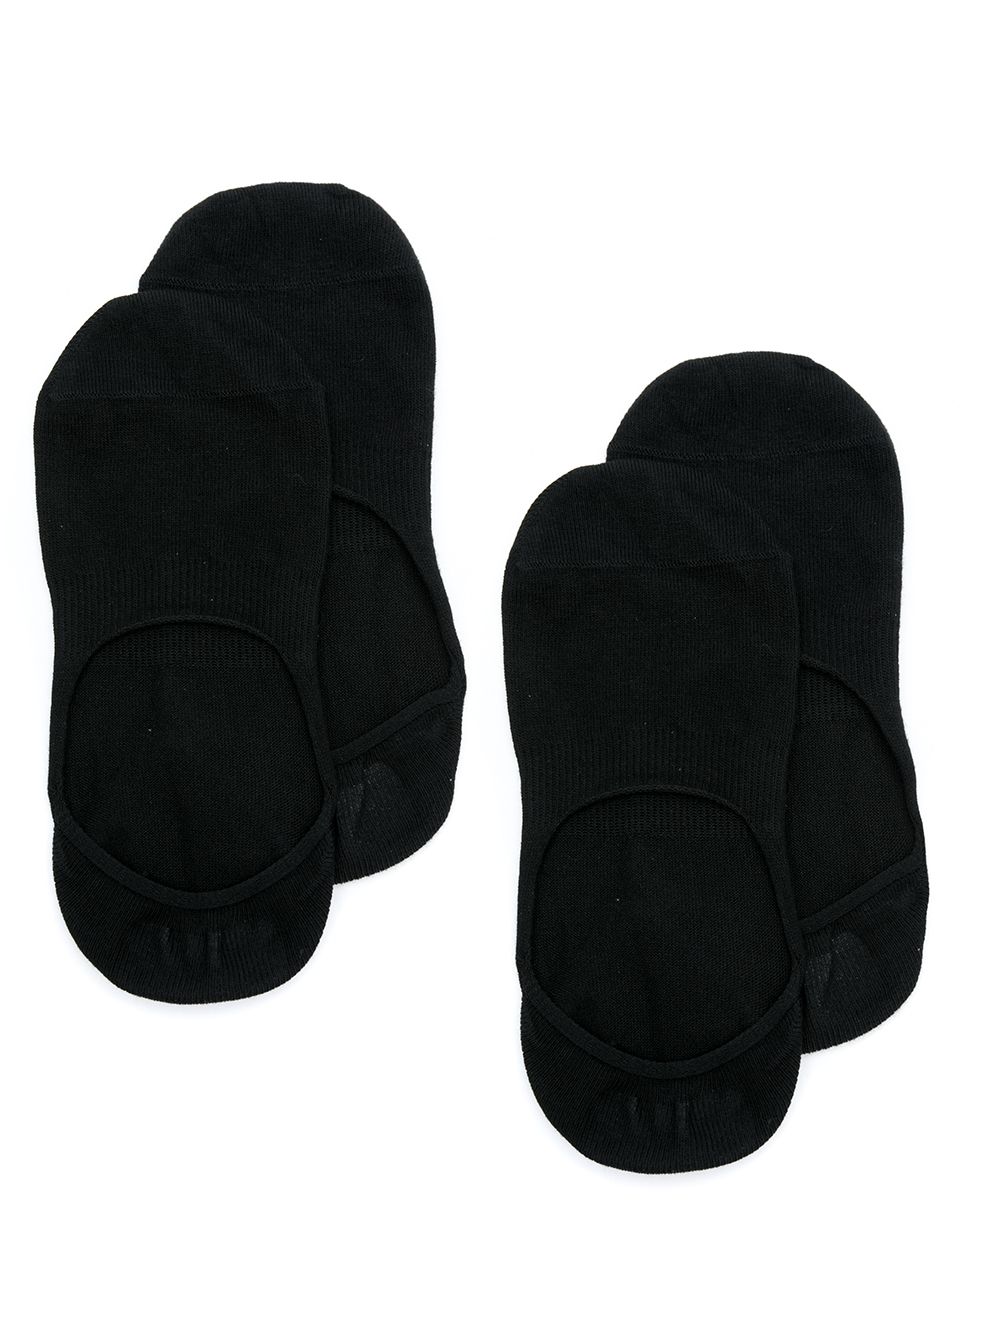 BOSS invisible socks pack of 2 - Black von BOSS